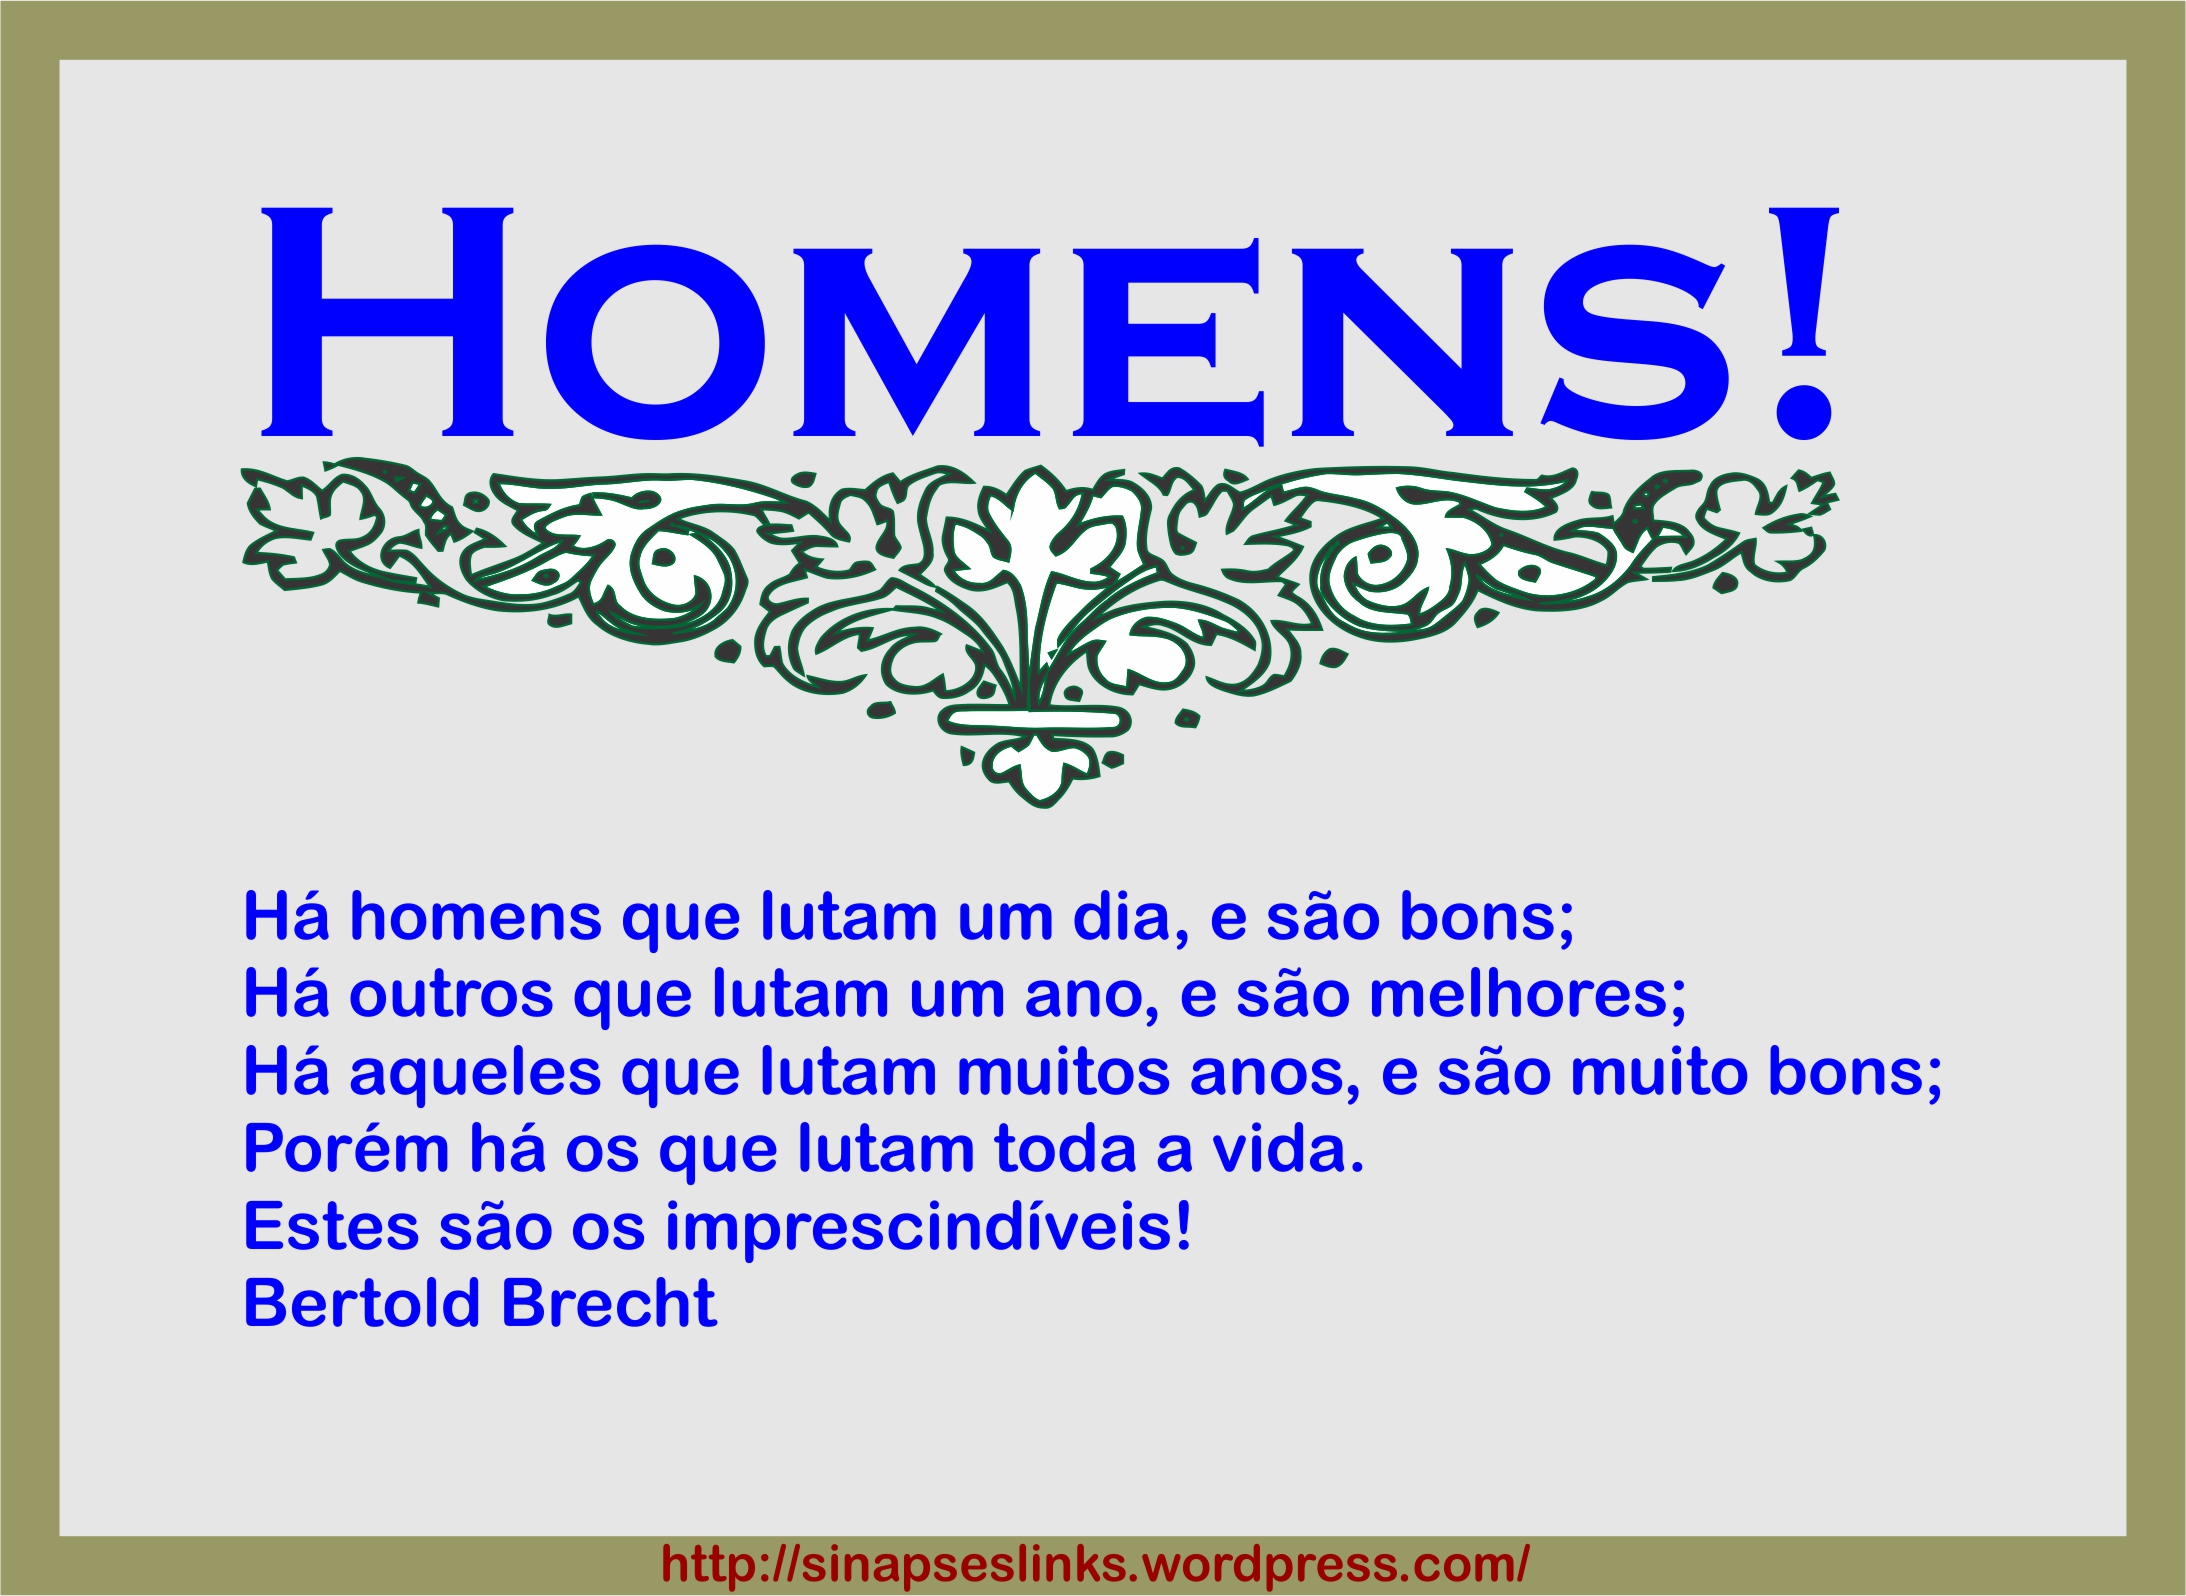 20130313_Homens